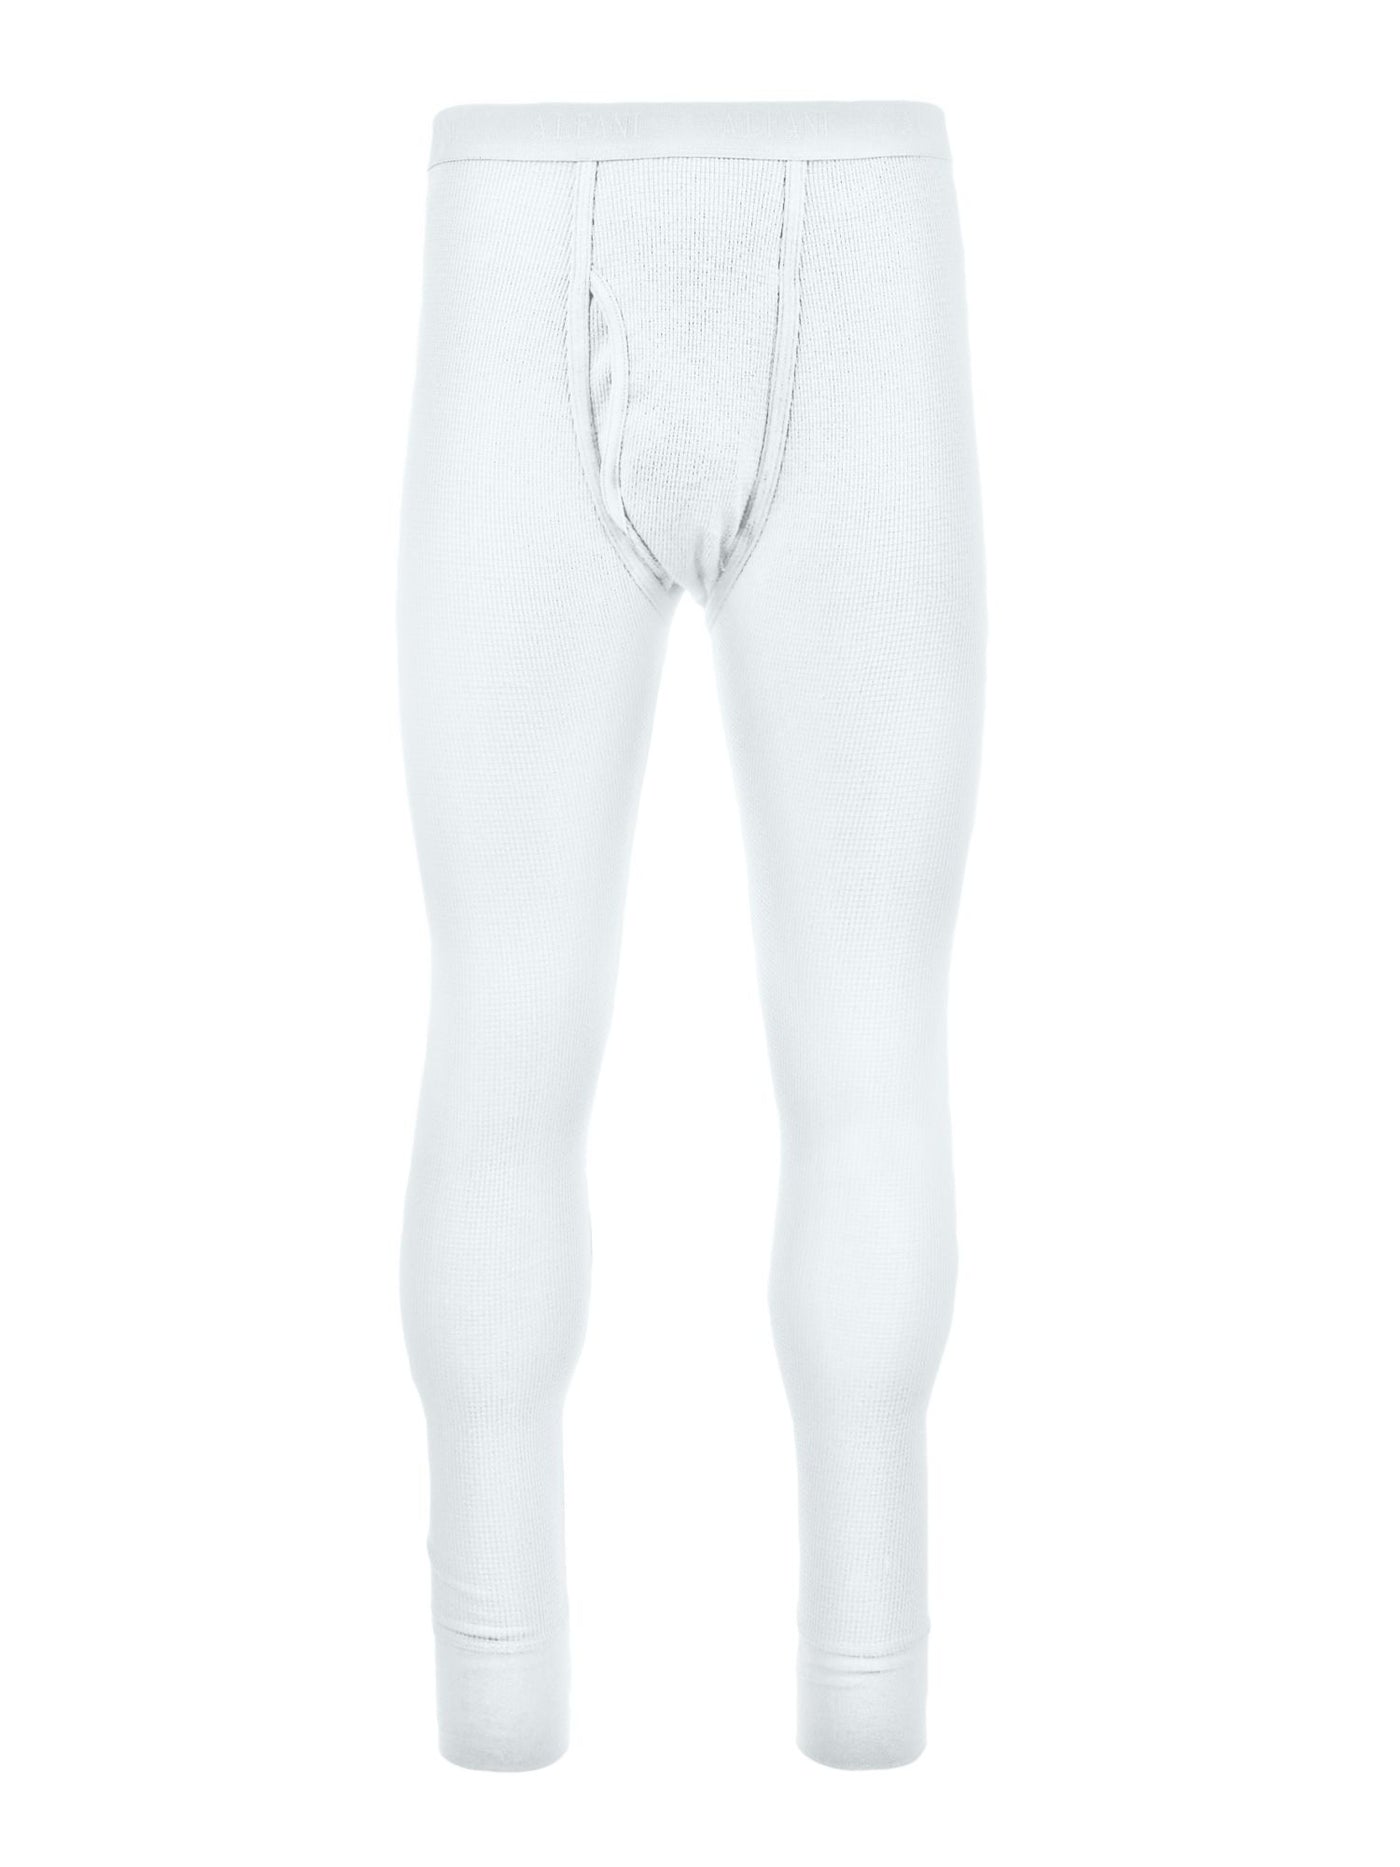 ALFANI Intimates White Thermal Underwear XXL